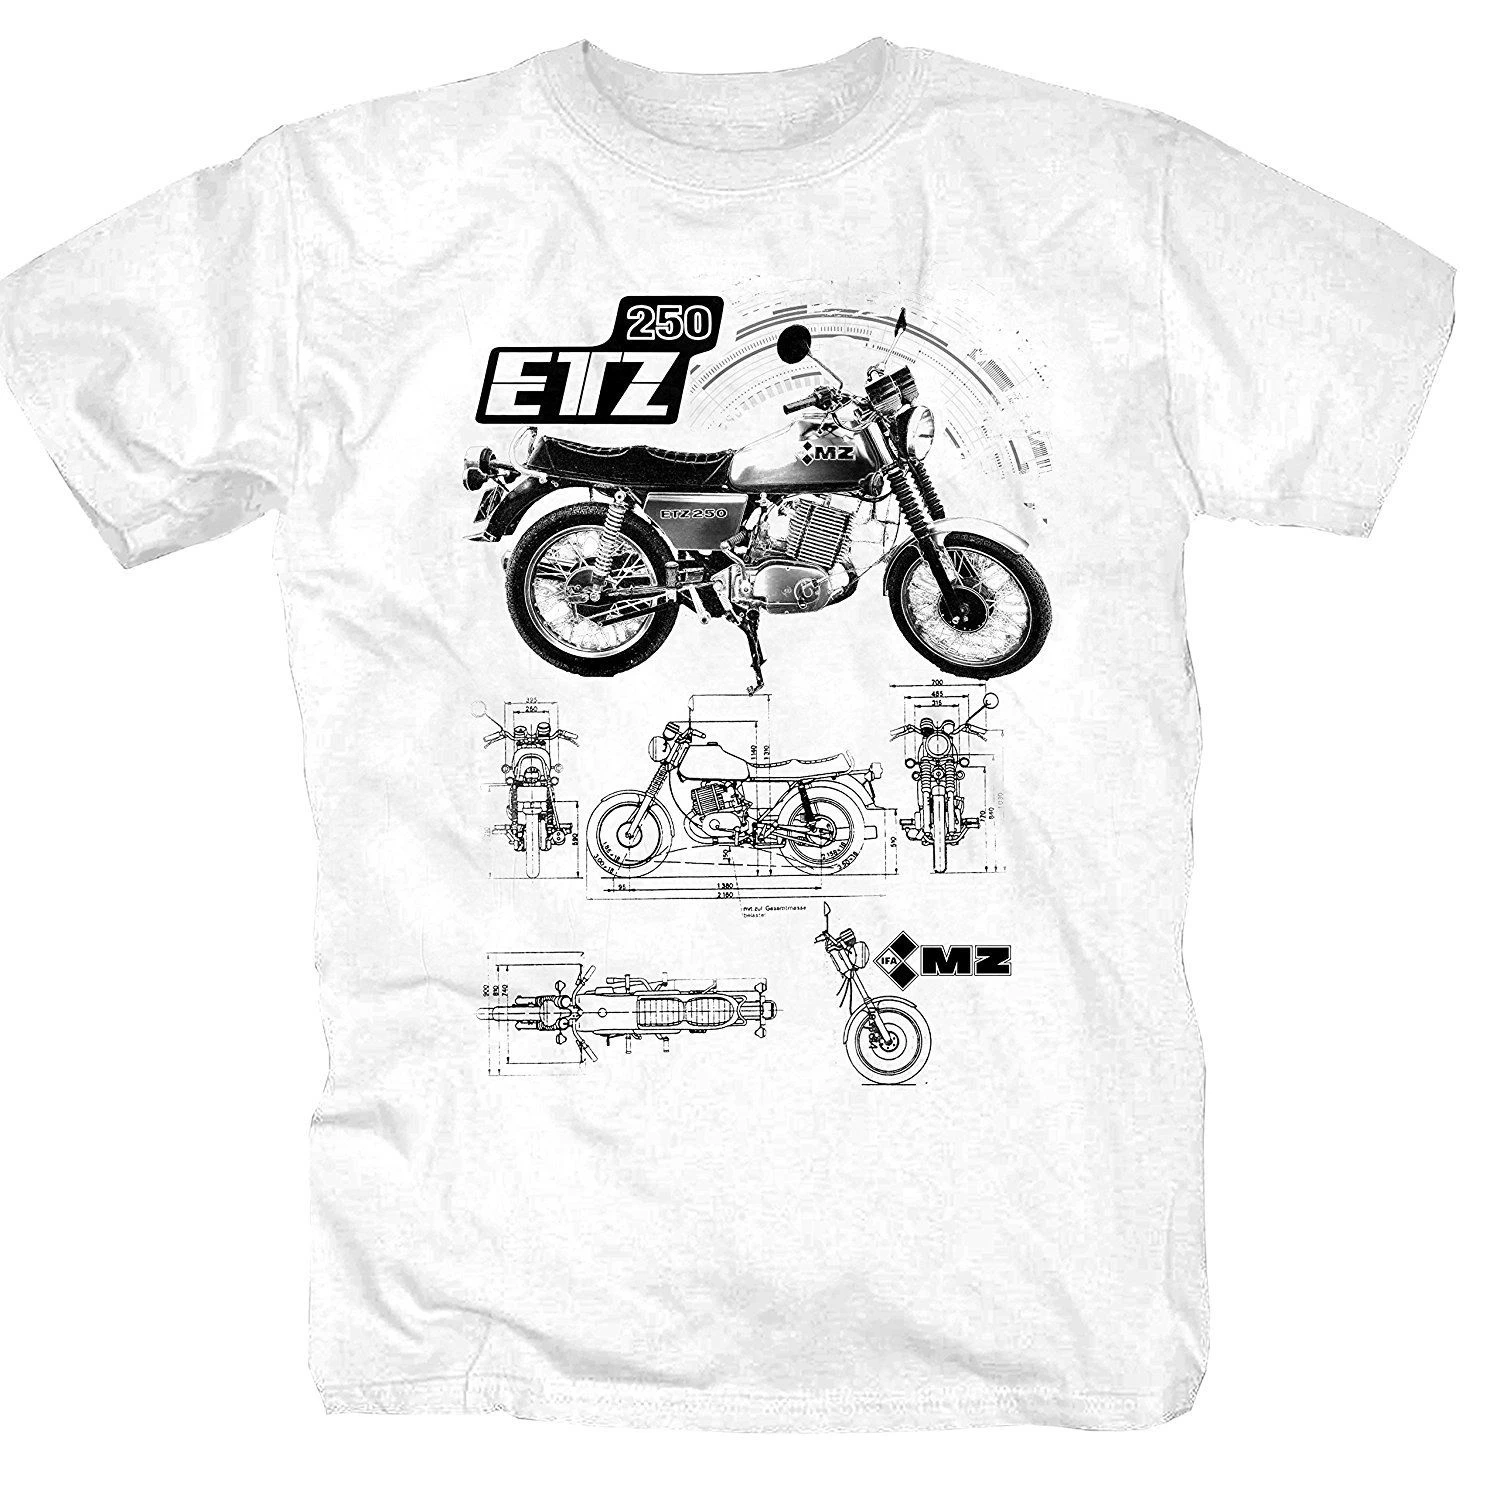 Tees Male Harajuku Top Fitness Brand Clothing T Shirt Shirt MZ ETZ 250 DDR  Kult Fun Motorrad Biker MC Ostalgie Zone Tee Shirt|T-Shirts| - AliExpress